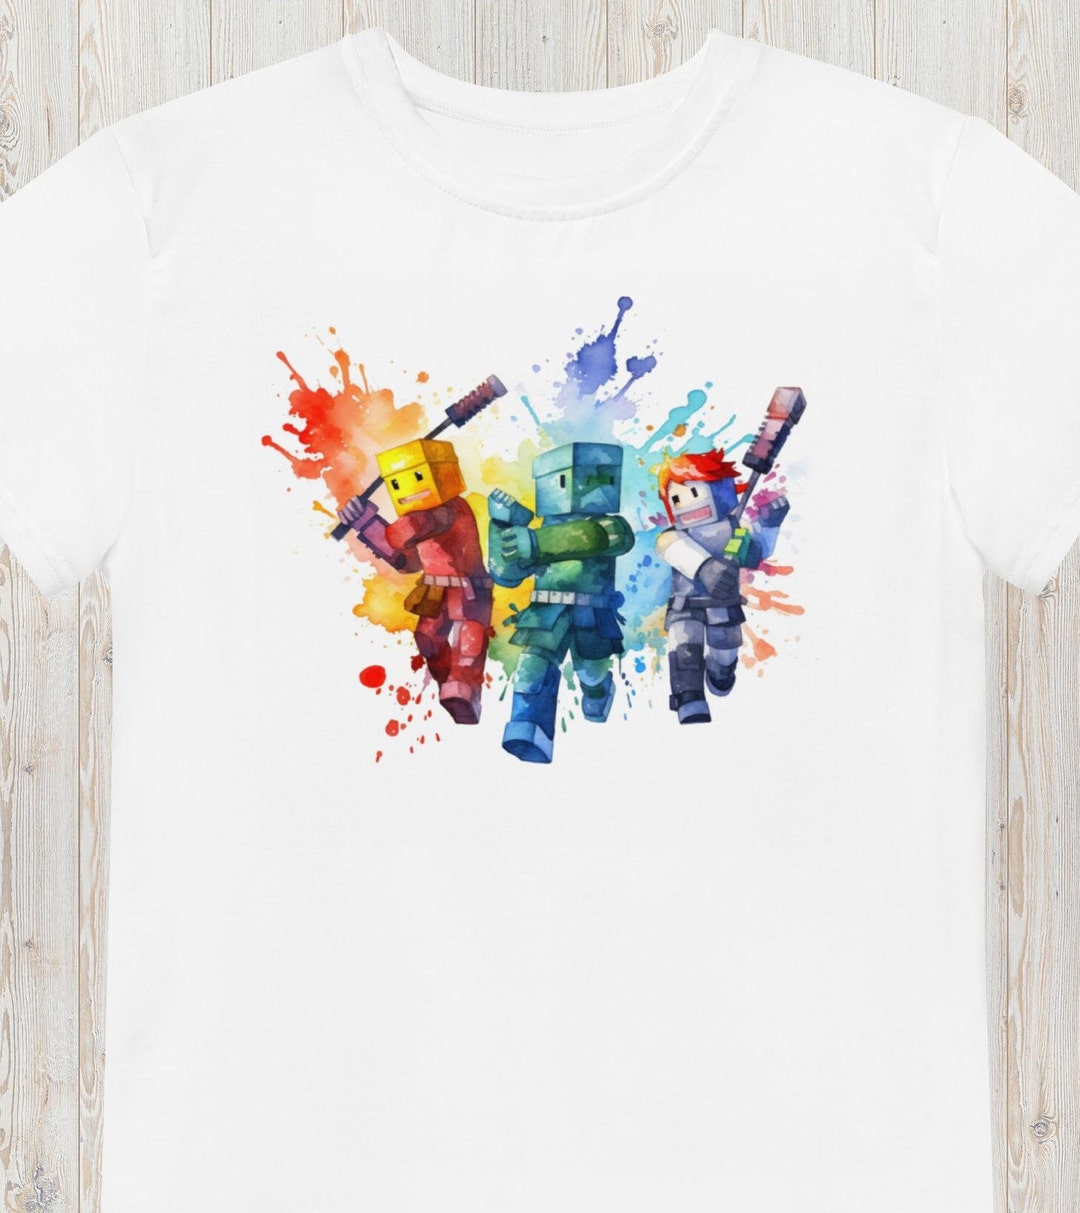 Roblox Colorful Tshirt Design Roblox Tshirts Stock Vector (Royalty Free)  2141847037